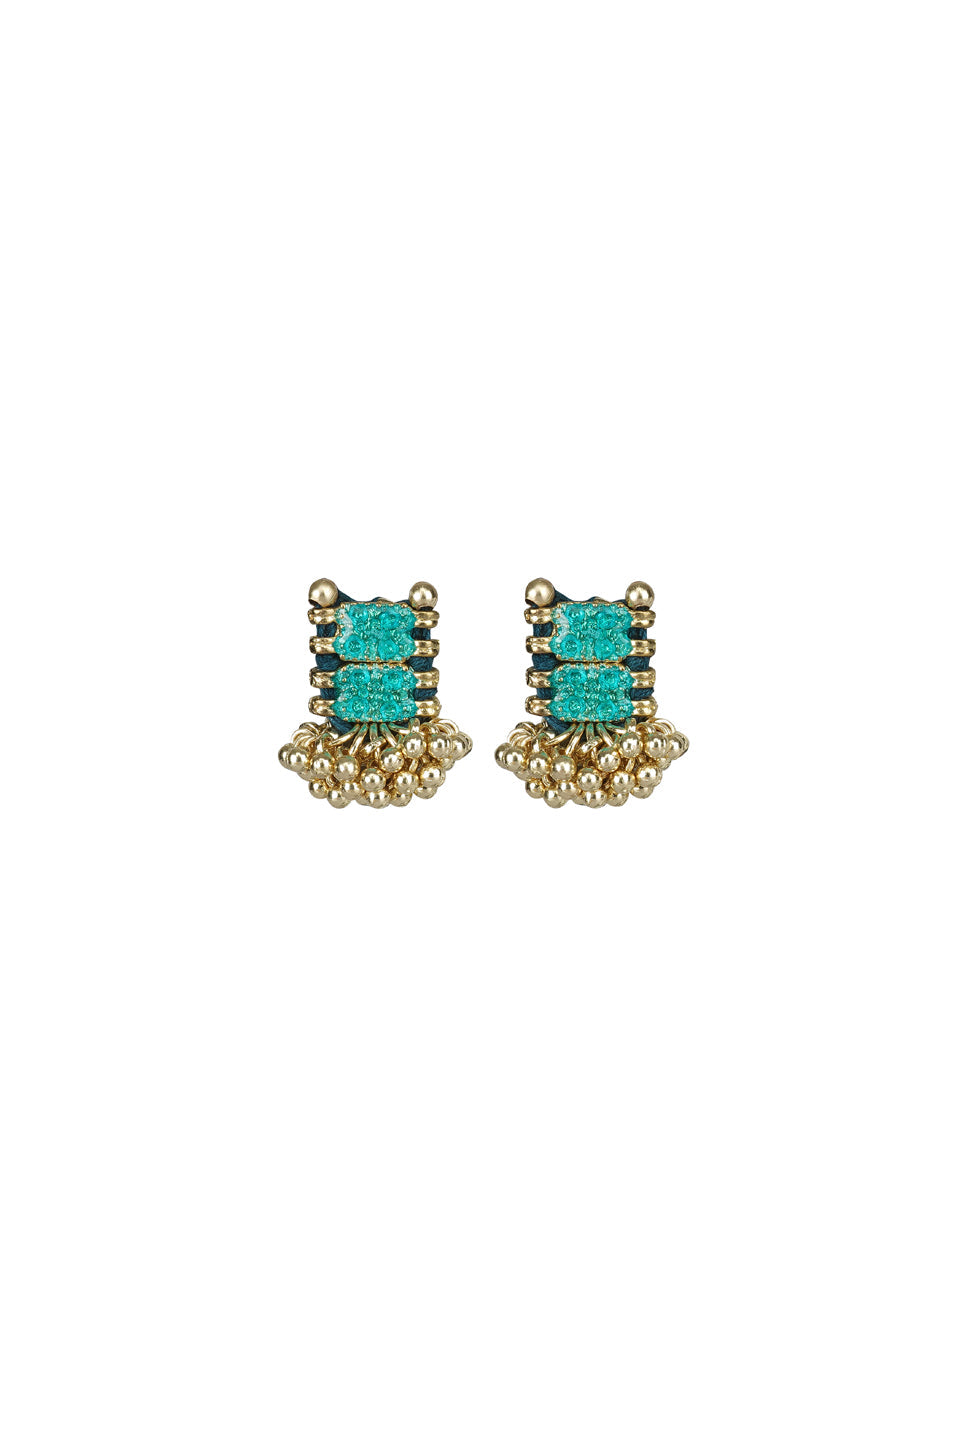 Glass Turquoise Four stone Enamel Earrings